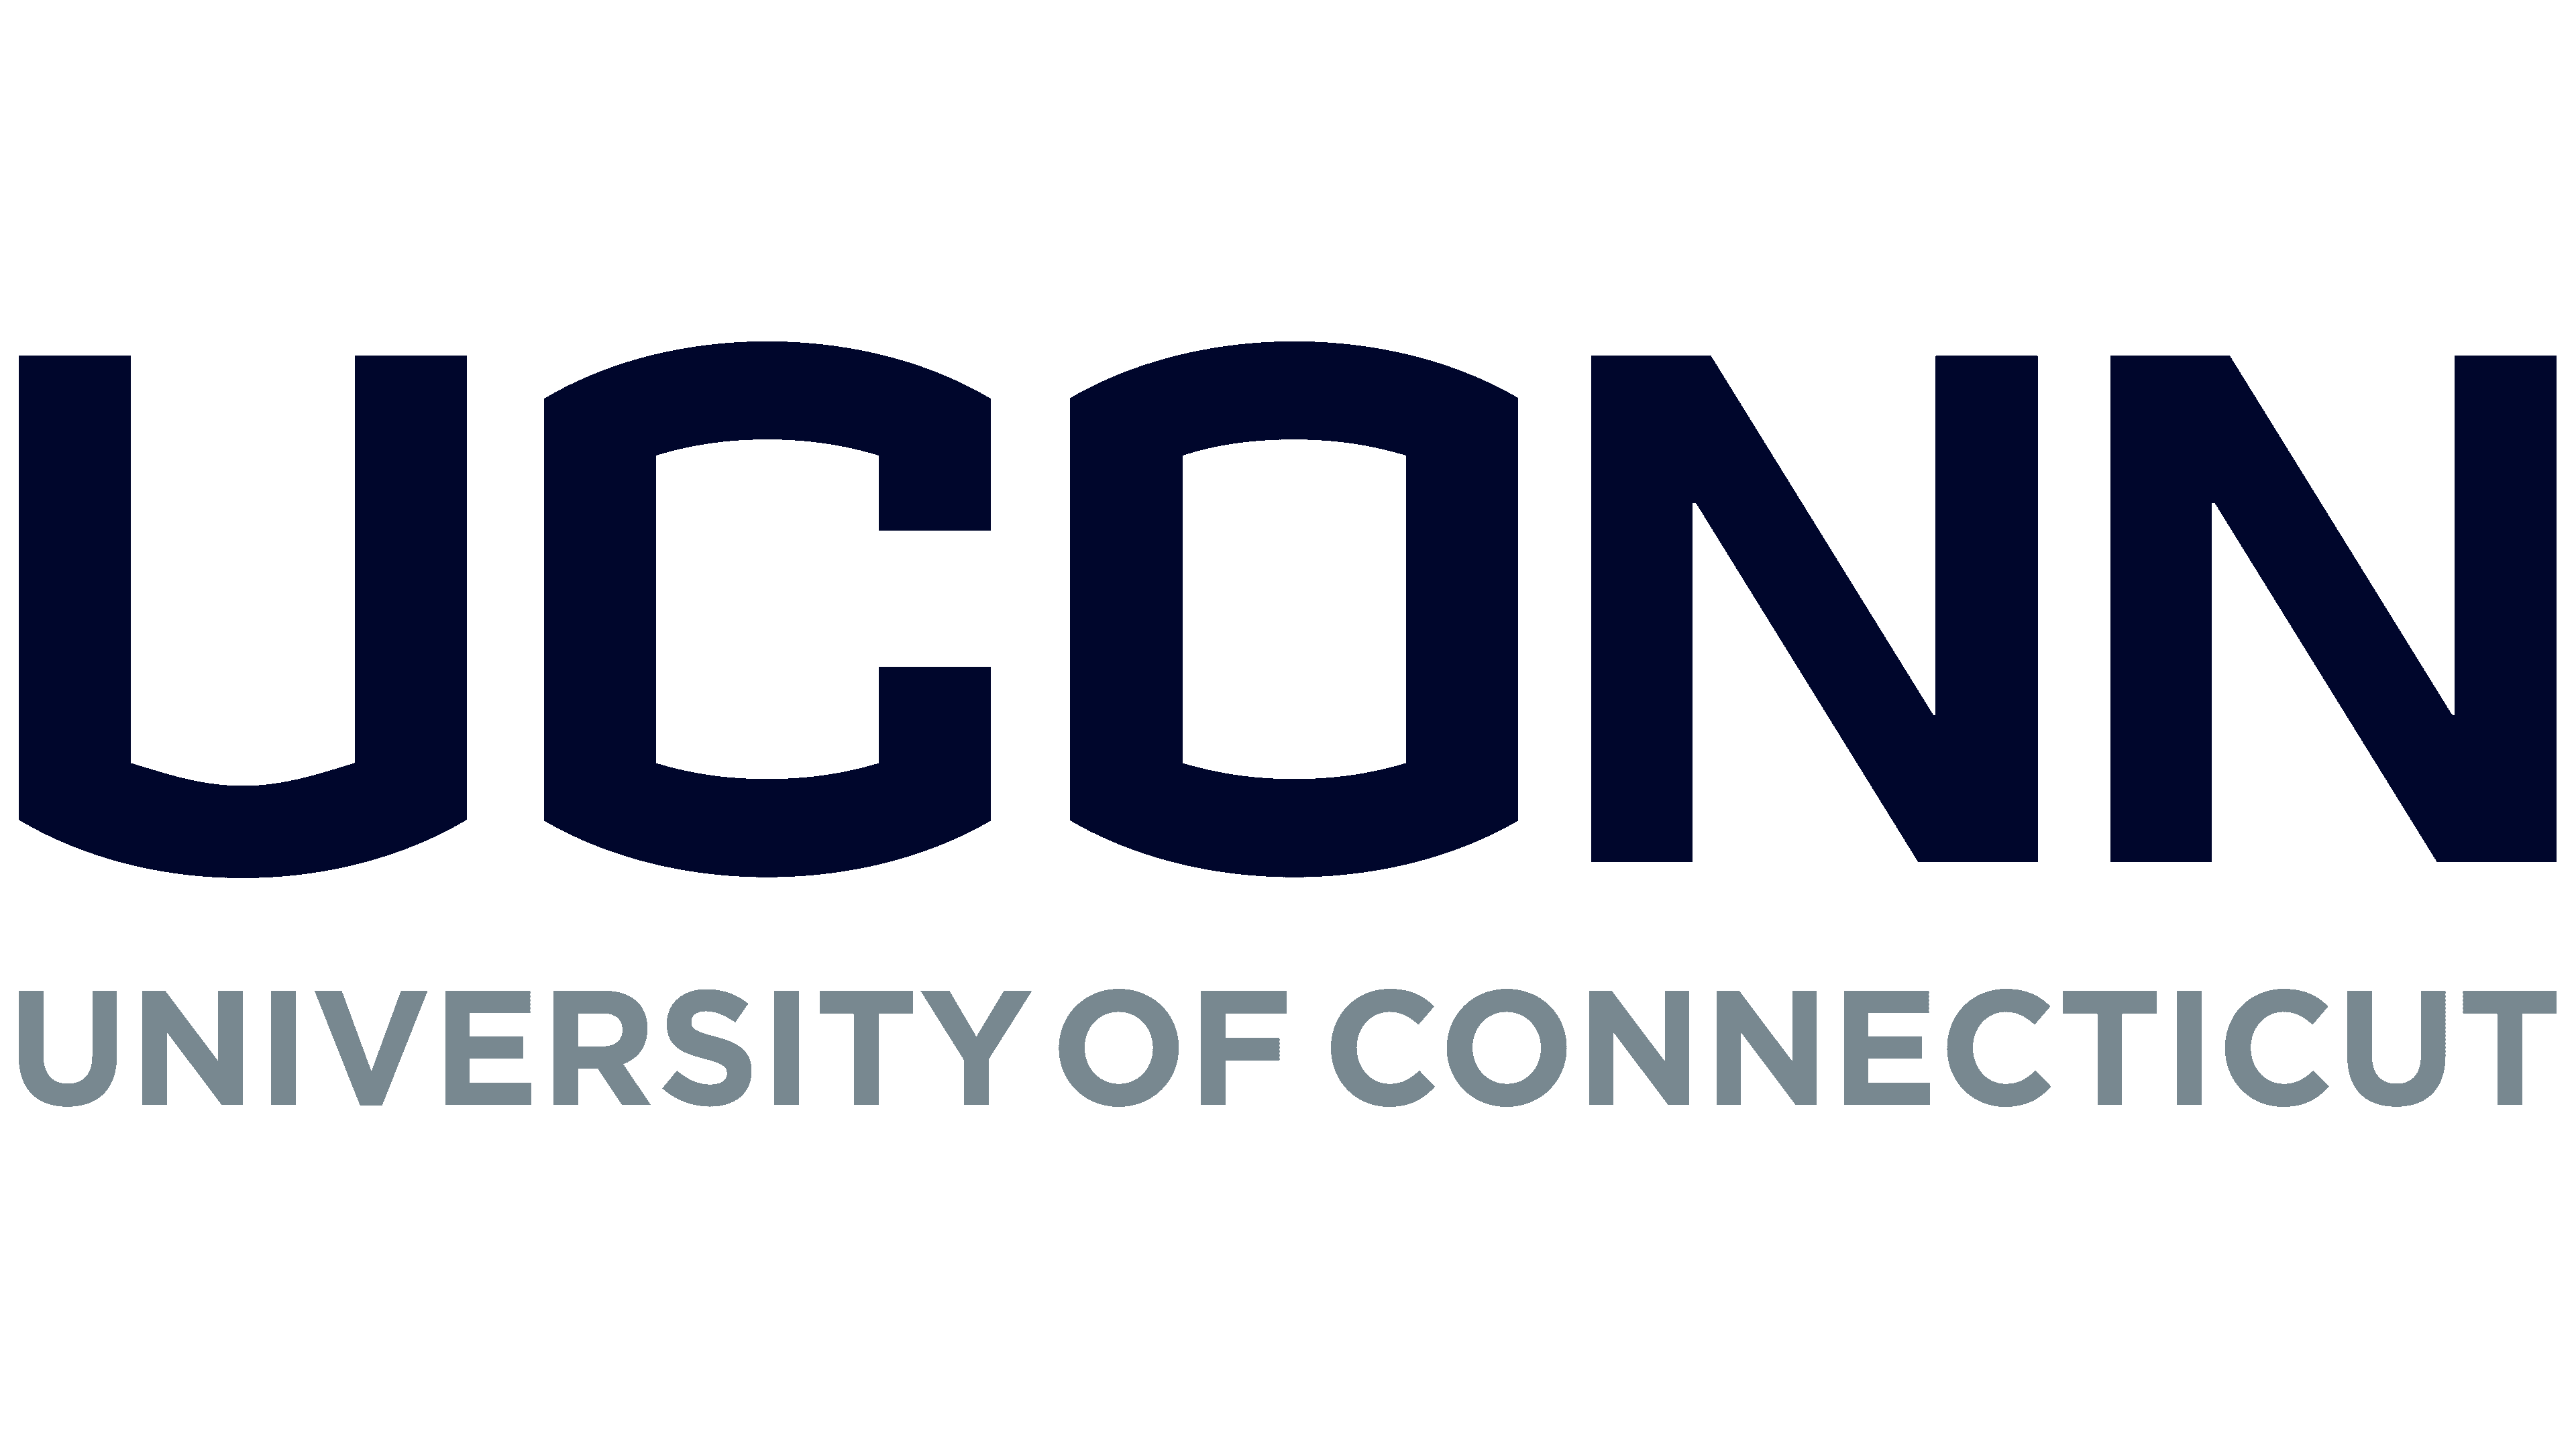 UConn (University of Connecticut) Logo